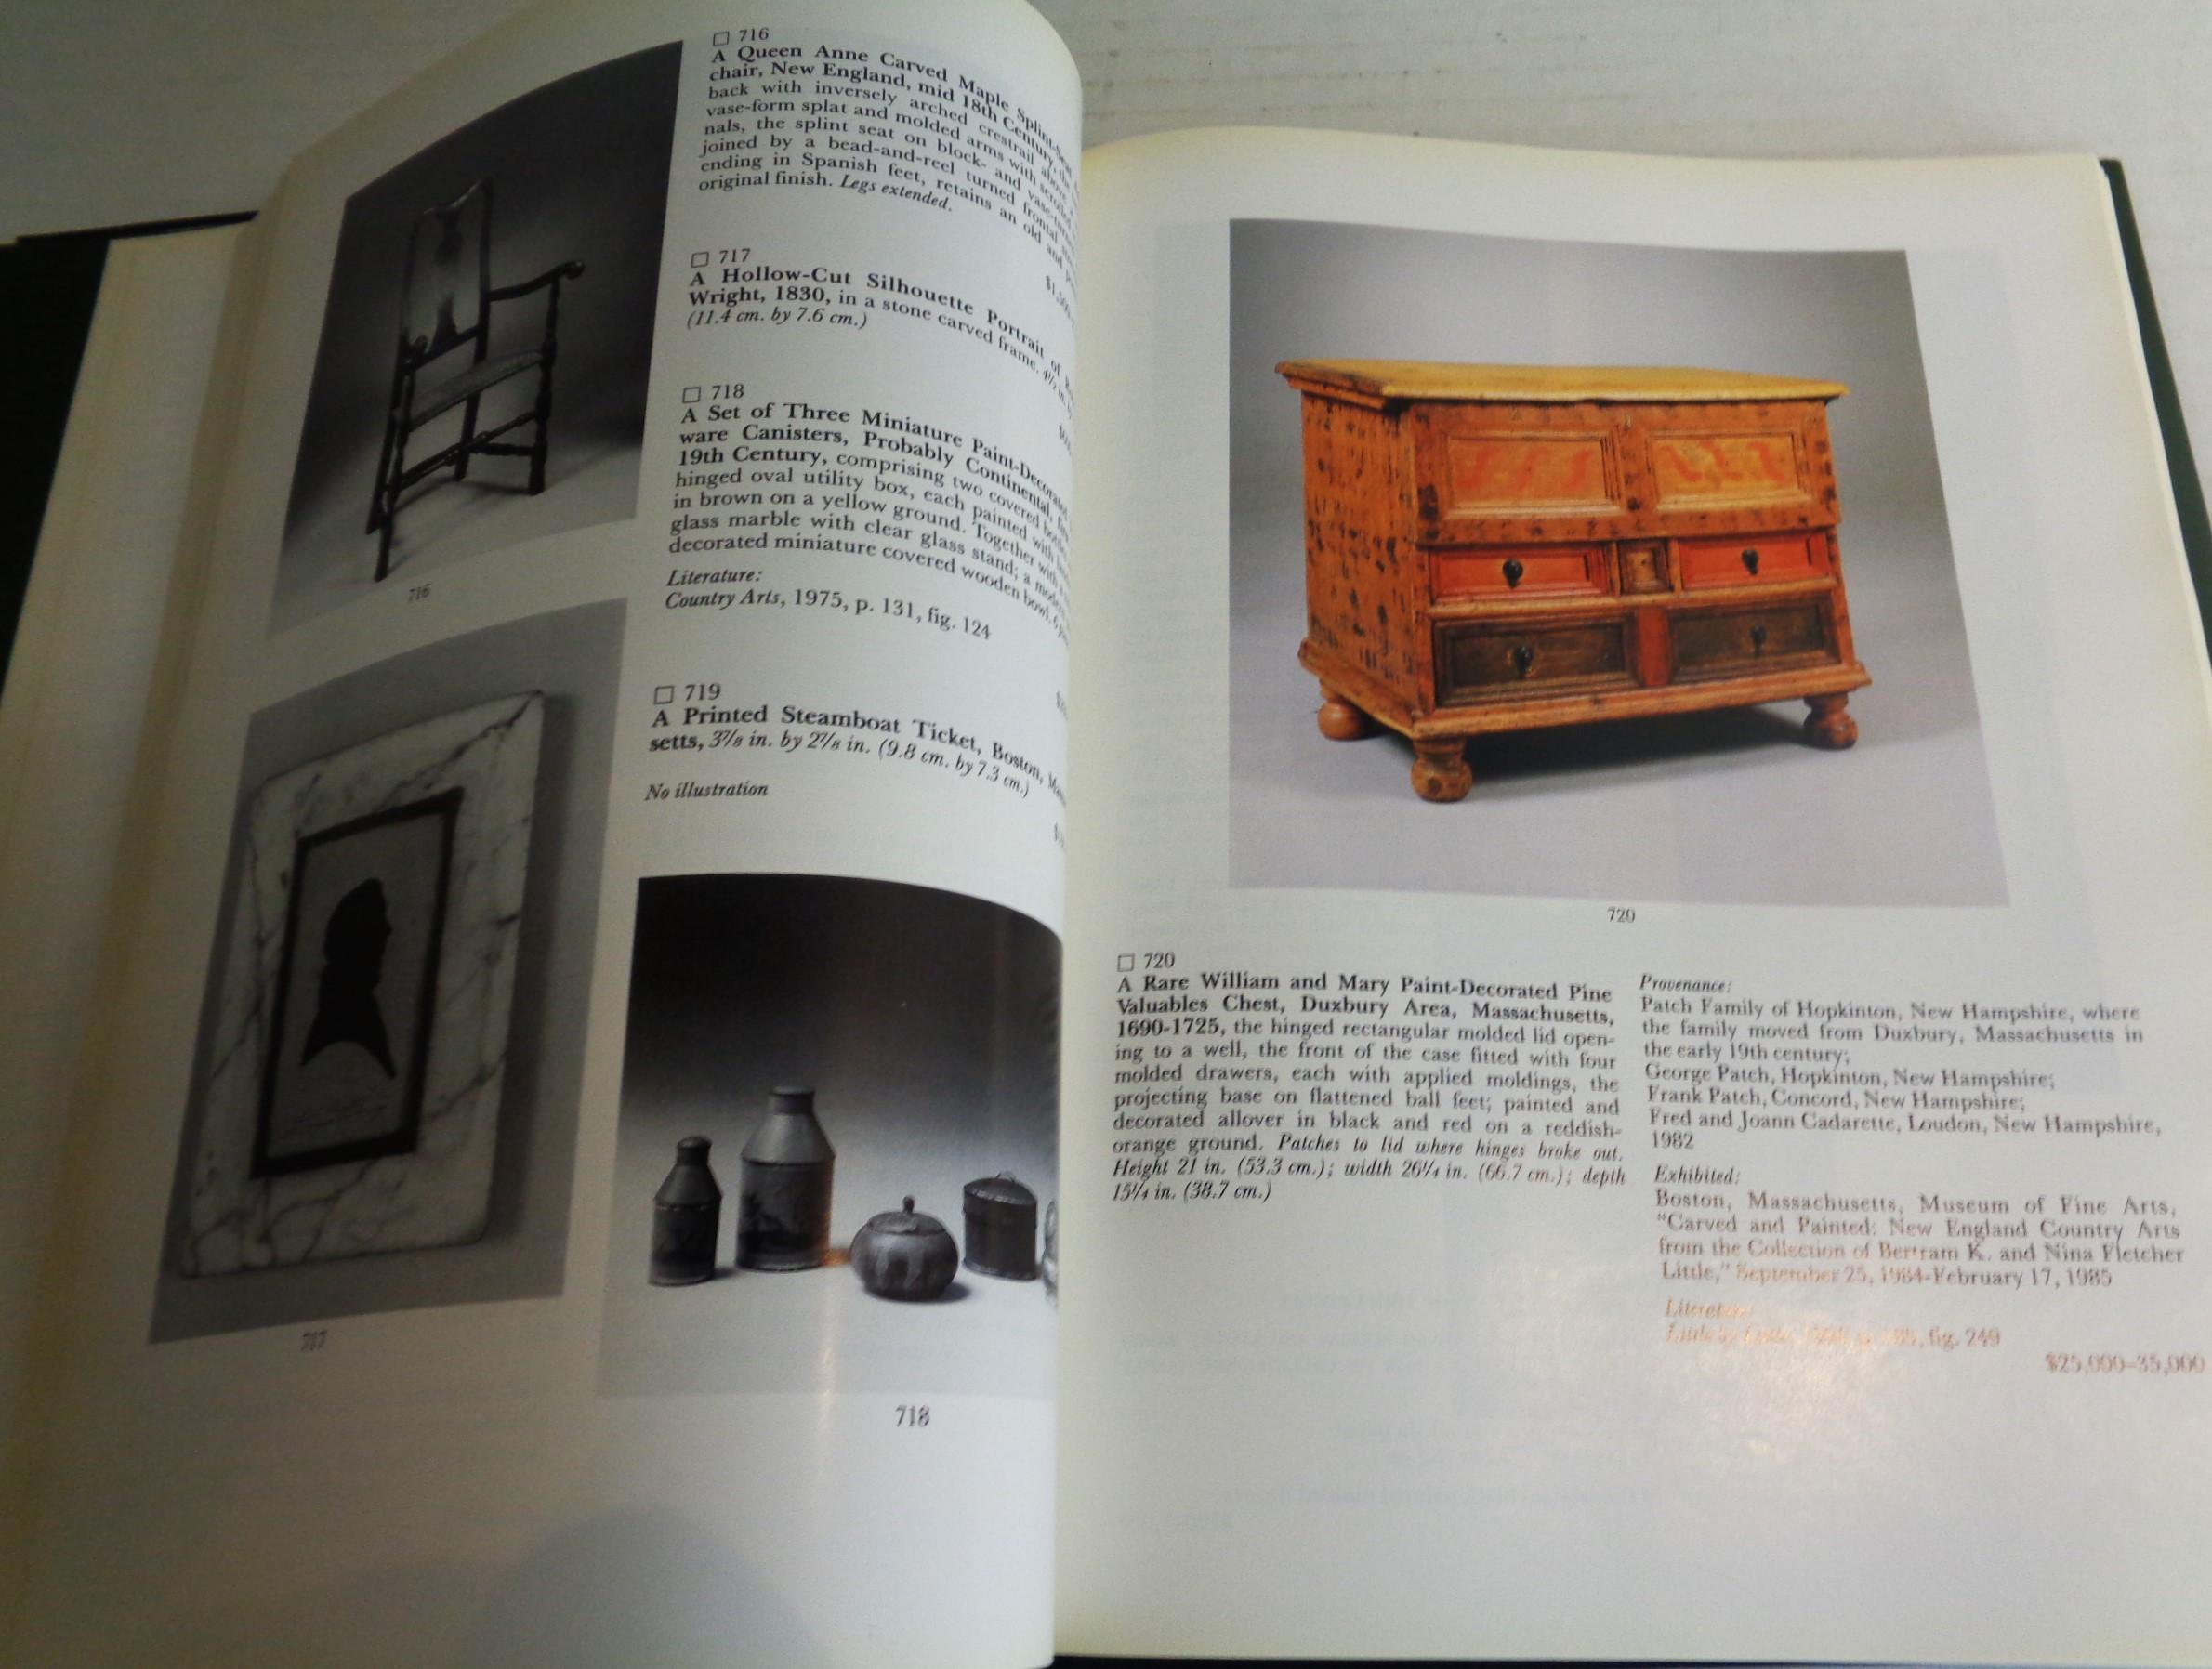 Bertram K. Little Nina Fletcher Little Collection: 1994 Sotheby's Catalogs 1 & 2 For Sale 10